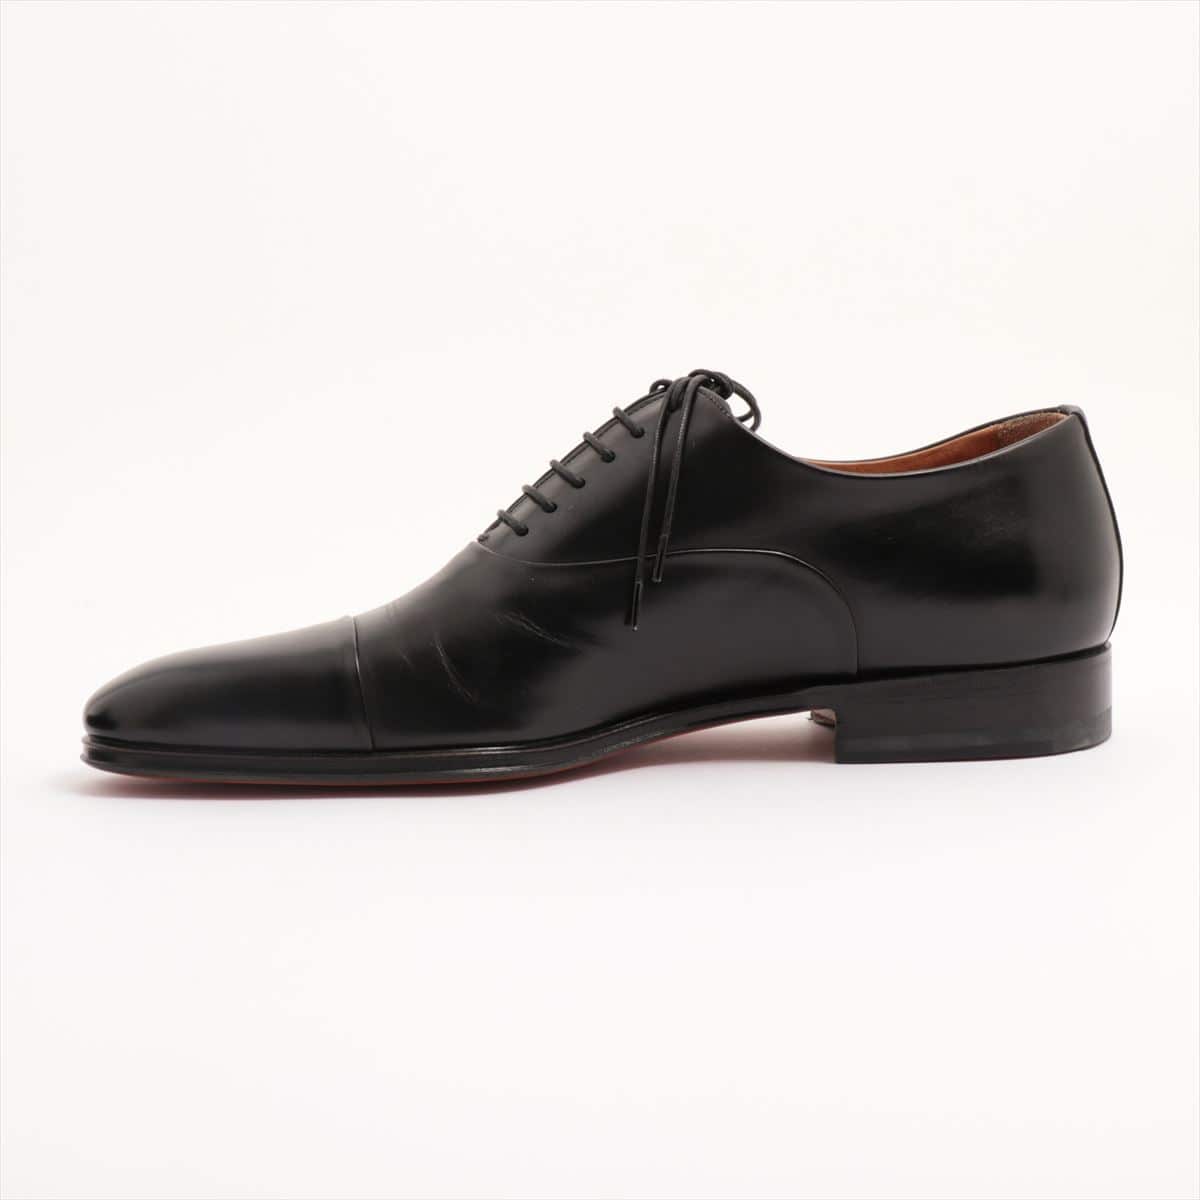 Santoni Leather Leather shoes 6 Men's Black straight tip, 6365